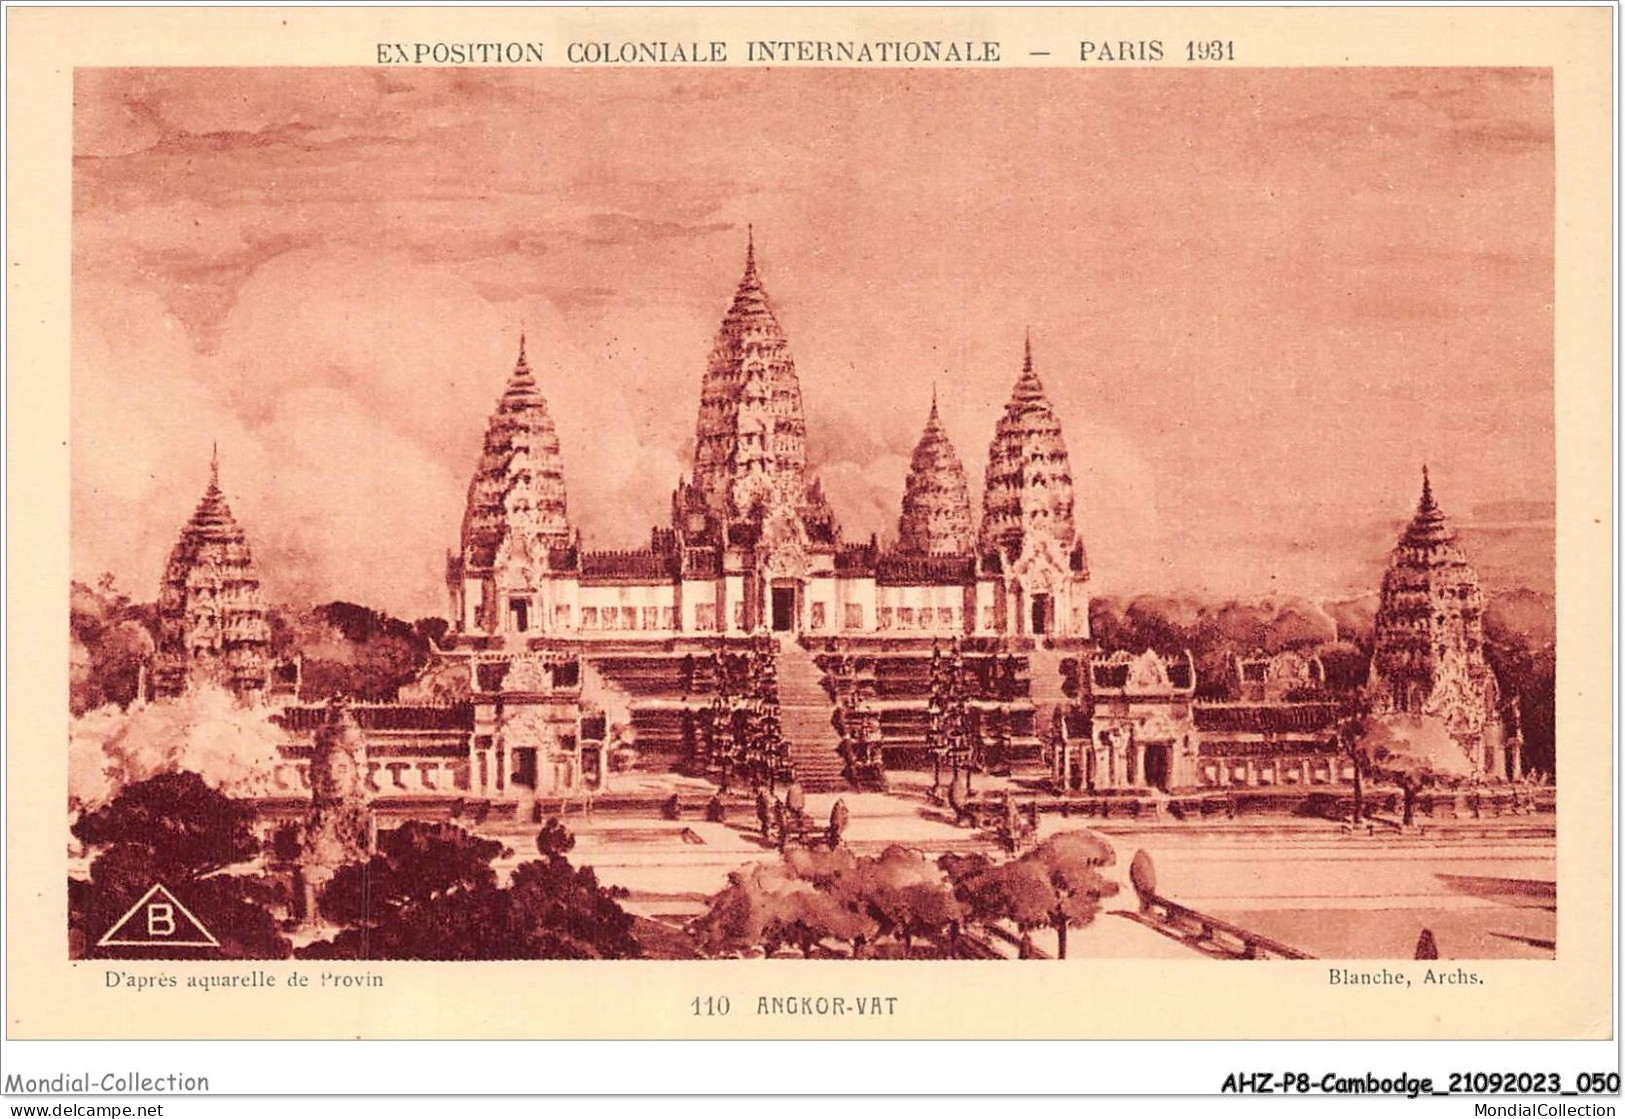 AHZP8-CAMBODGE-0708 - EXPOSITION COLONIALE INTERNATIONALE - PARIS 1931 - ANGKOR-VAT - Cambodge